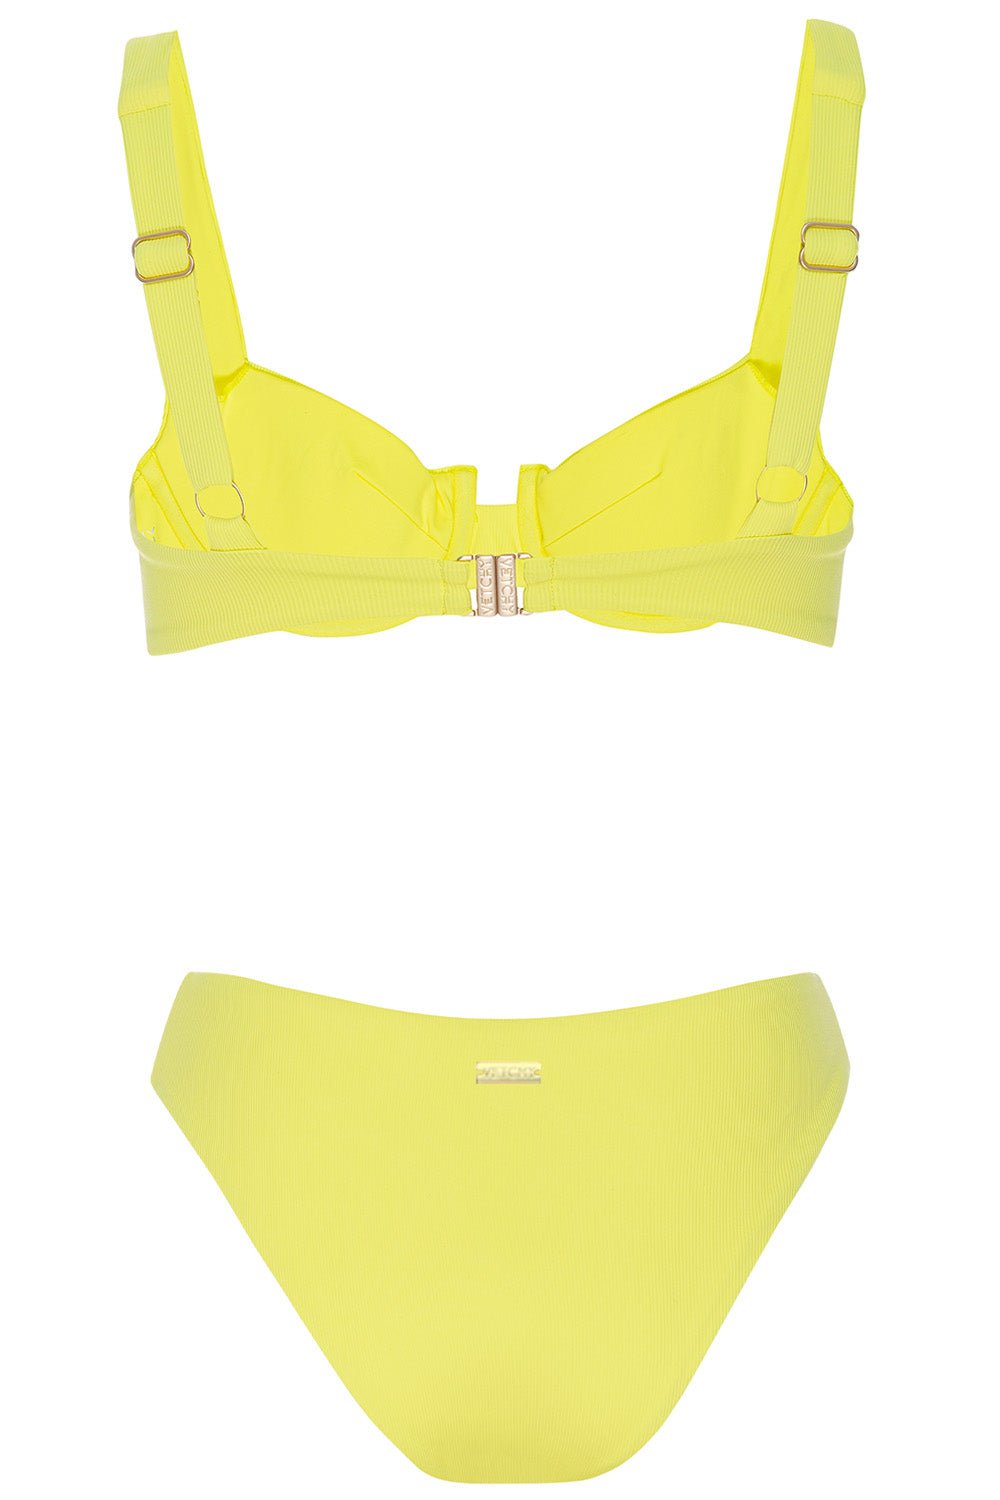 Back view of the Laguna bikini yellow ribbed set on a white background